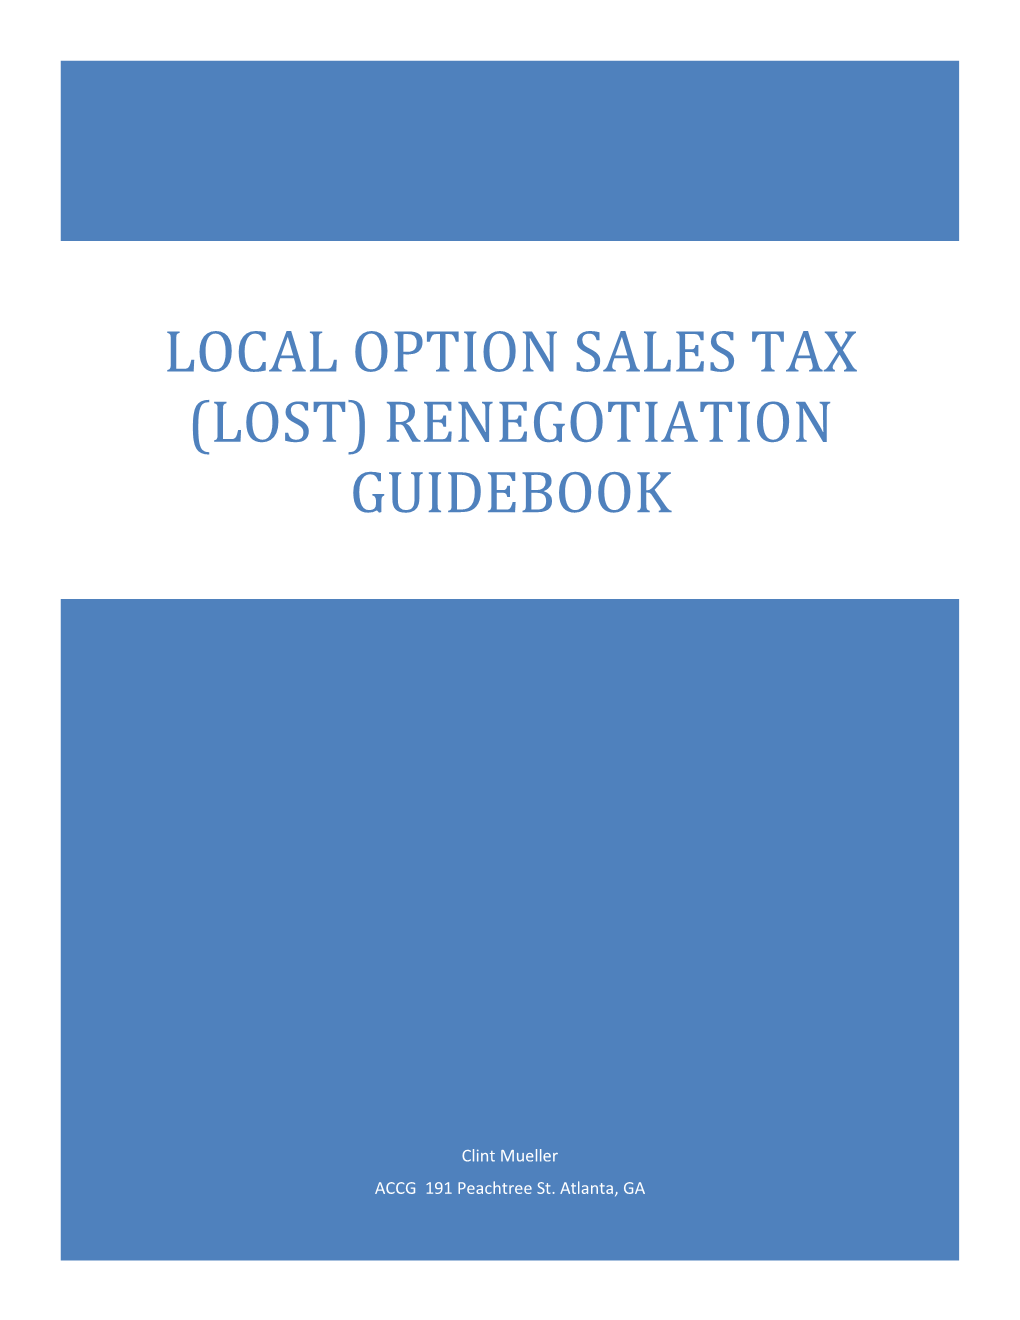 Local Option Sales Tax (Lost) Renegotiation Guidebook